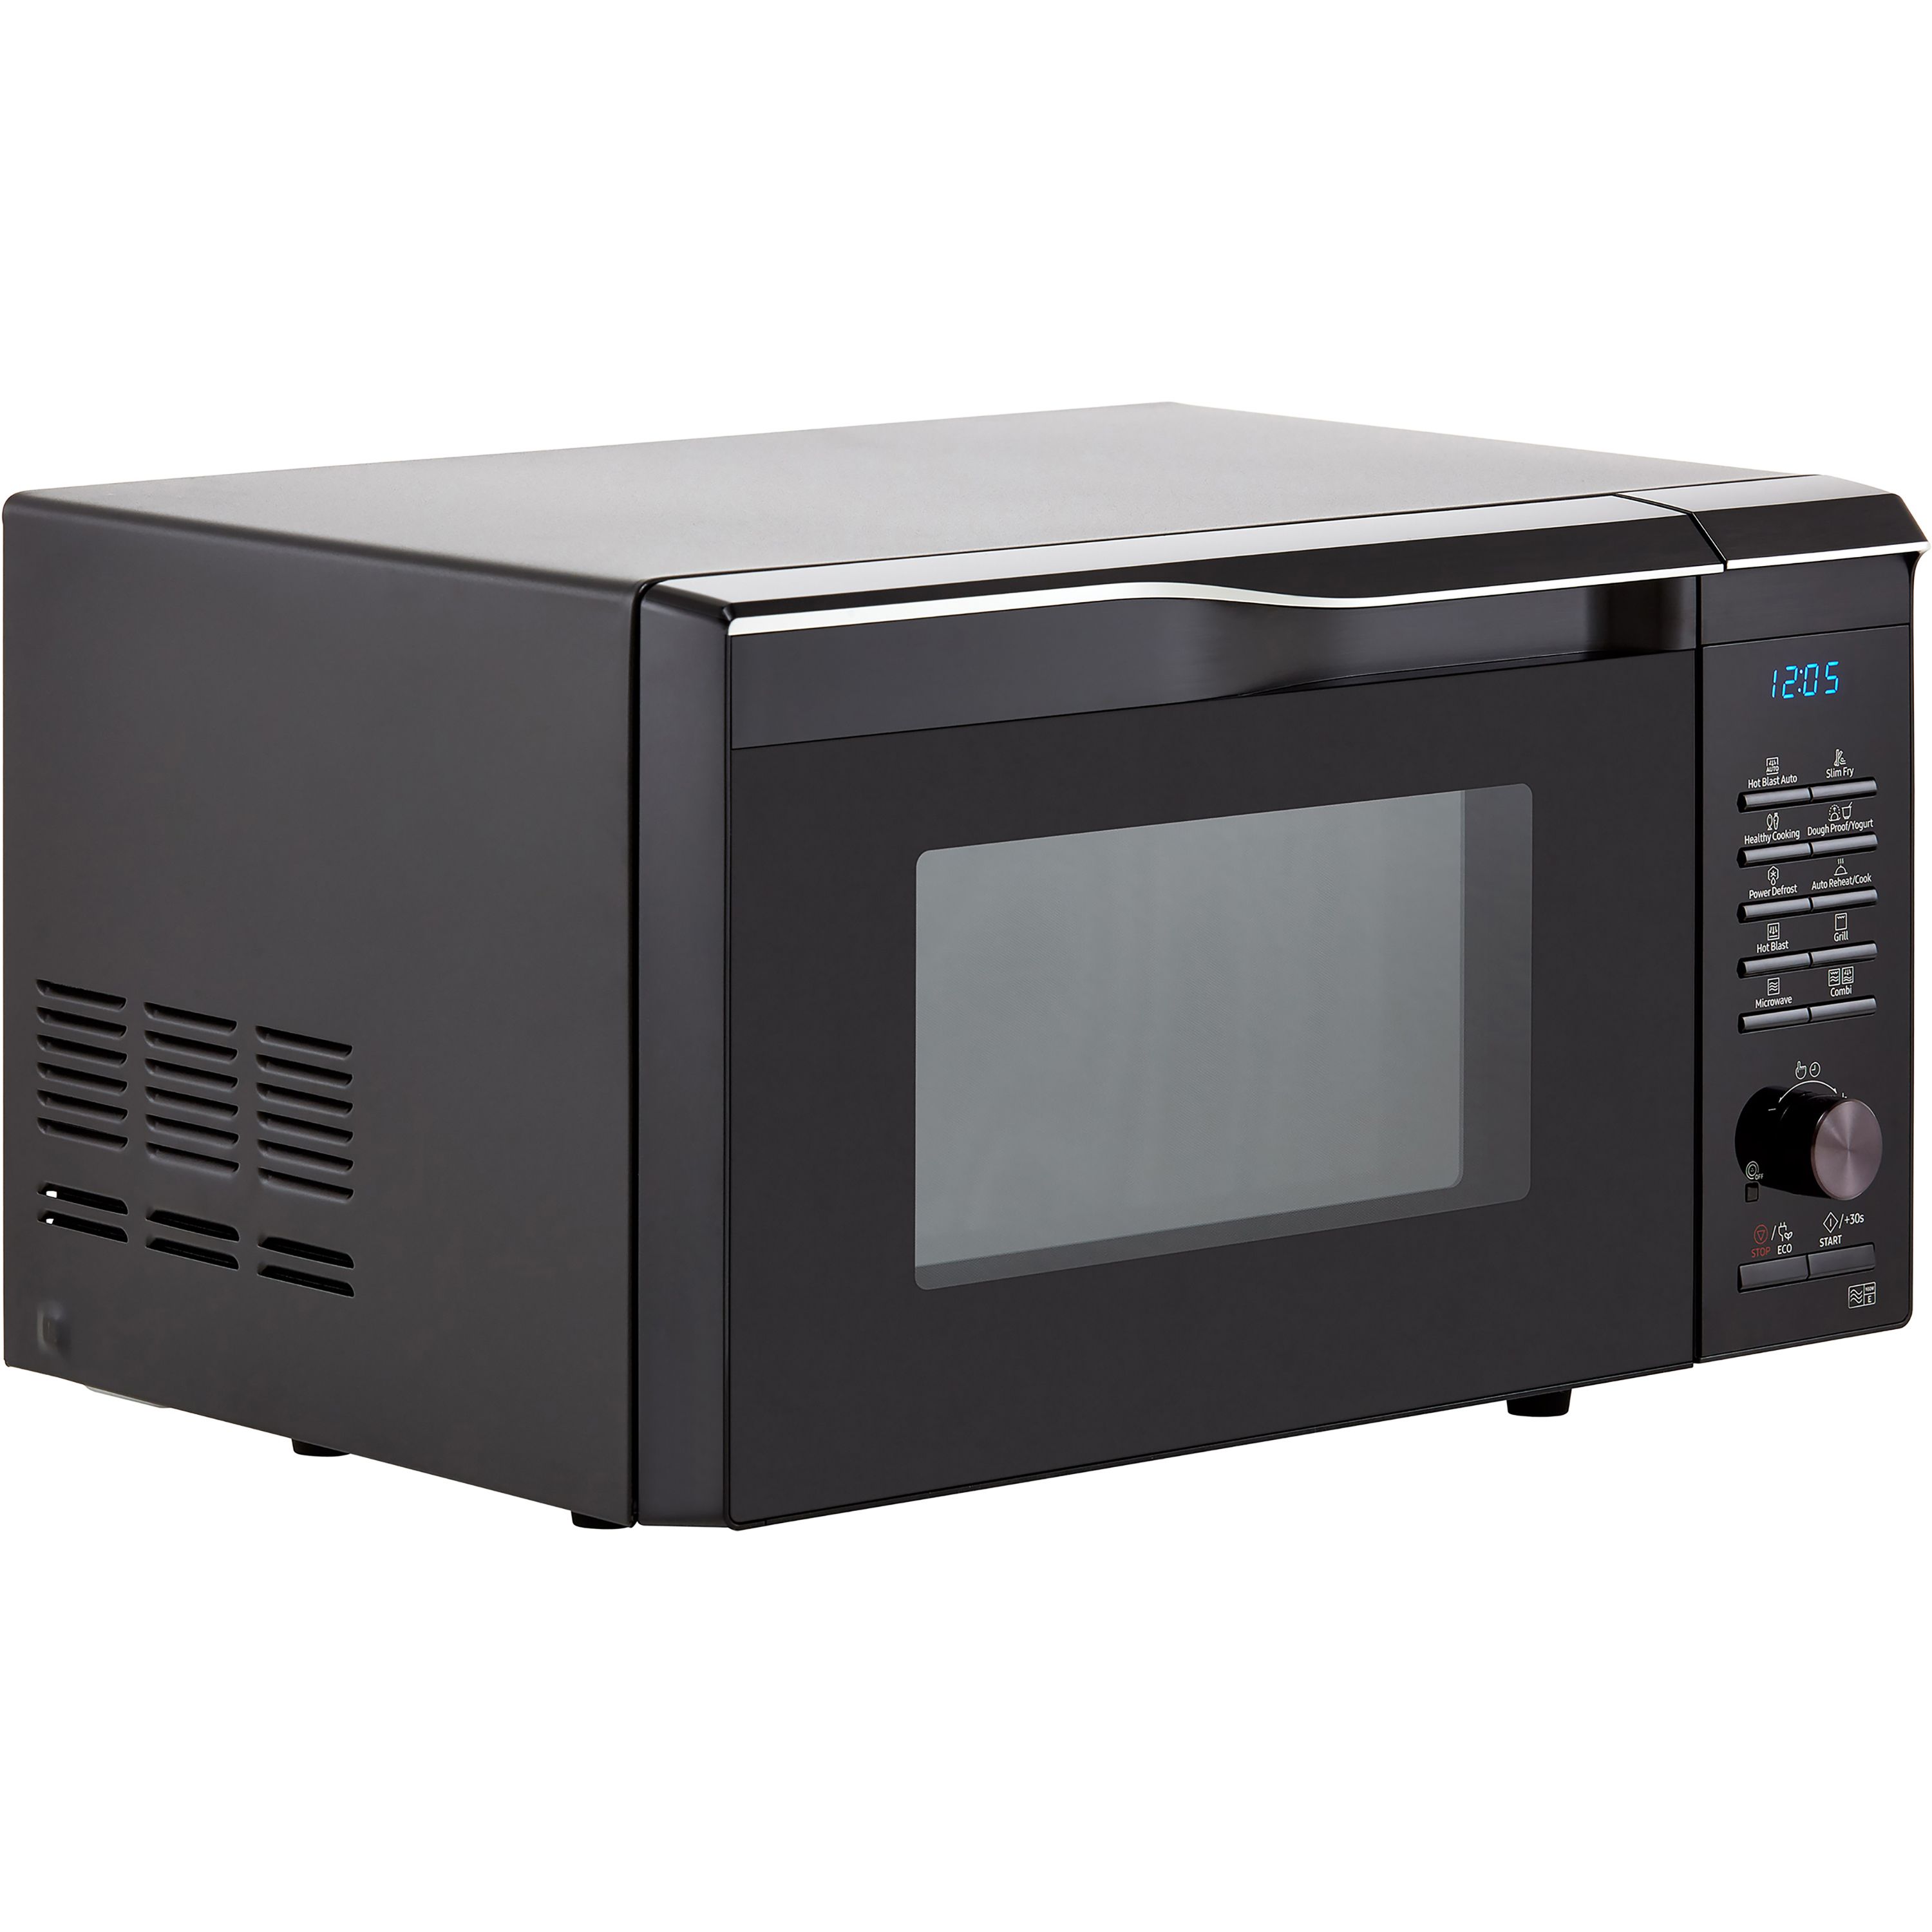 Samsung Easy View MC28M6055CK_BK 28L Freestanding Microwave - Black